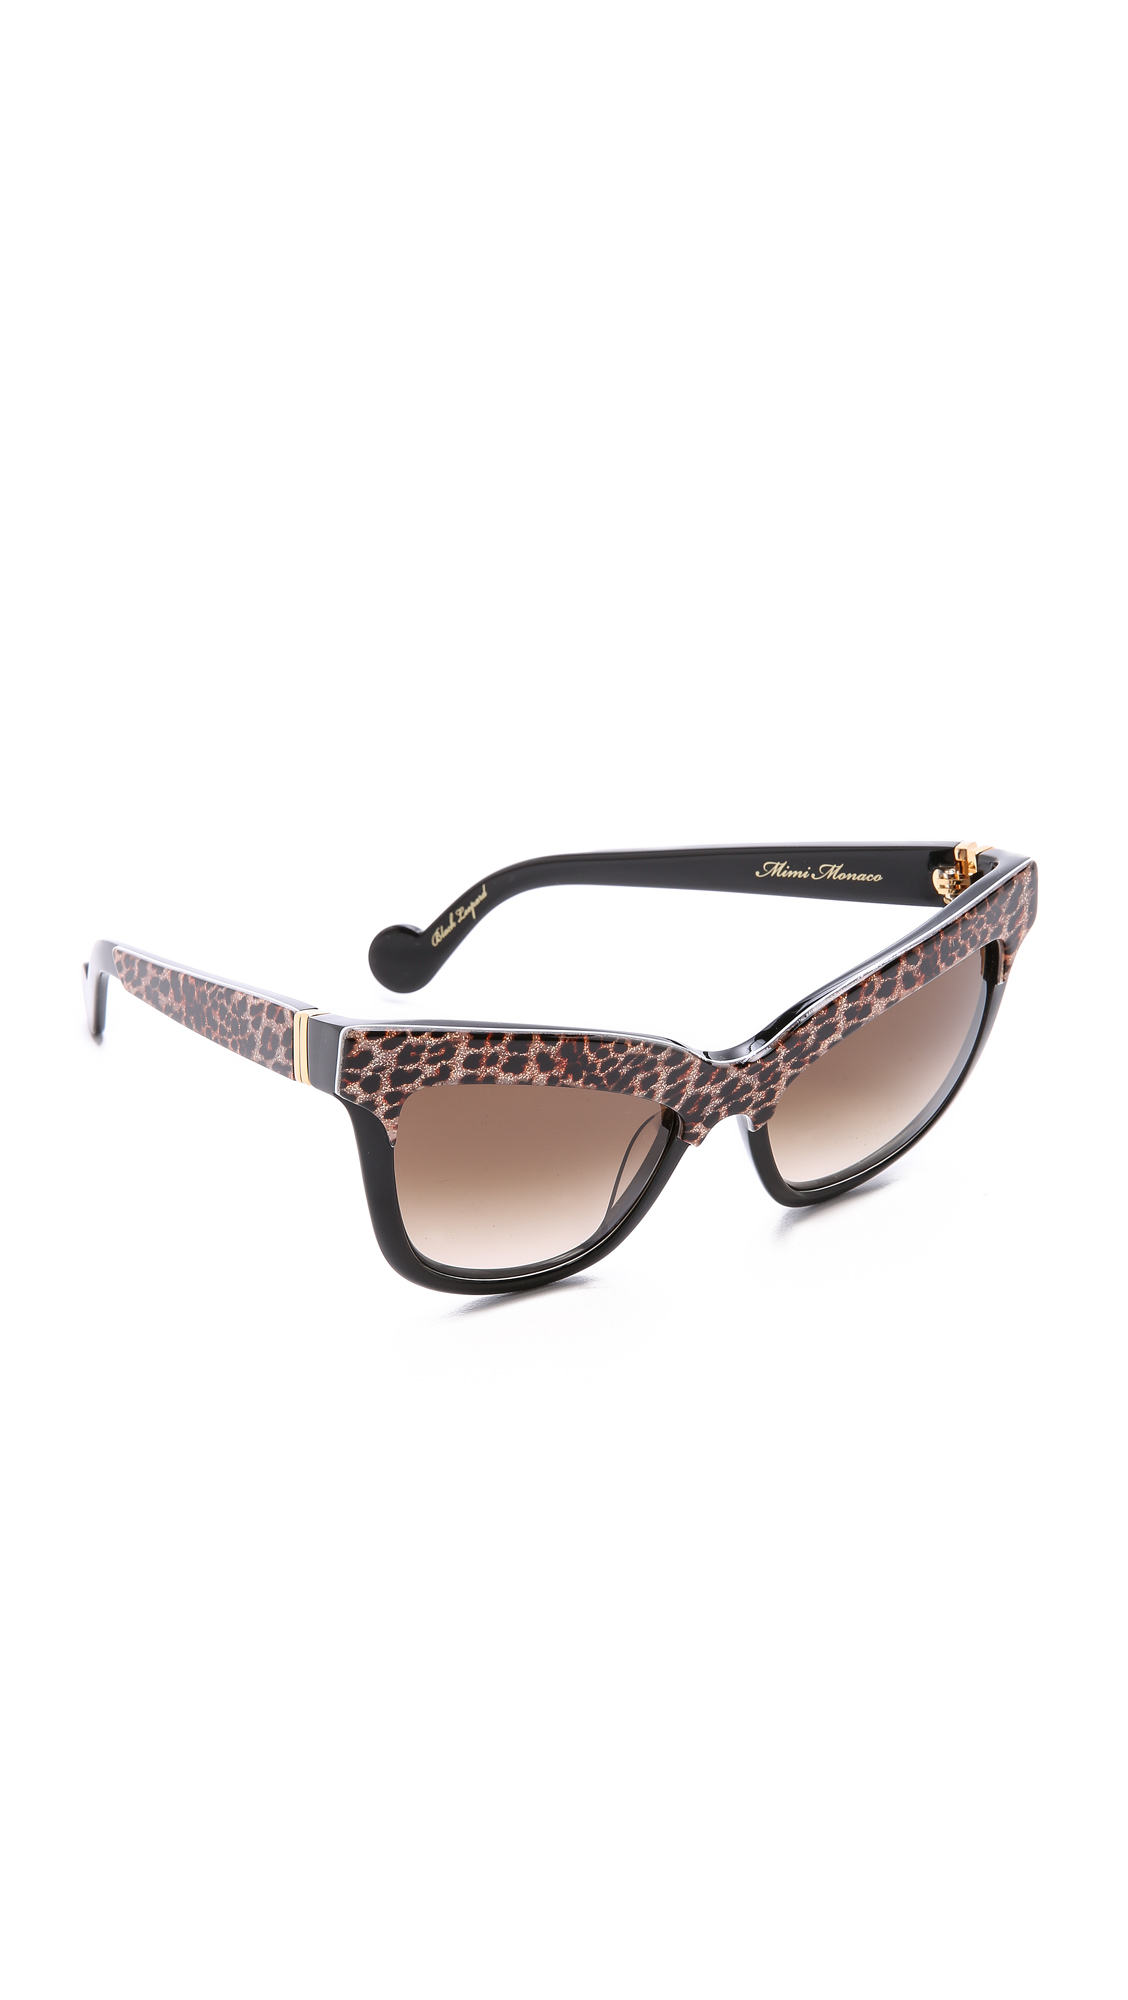 Lyst - Anna Karin Karlsson Mimi Monaco Sunglasses - Black Leopard/Brown ...